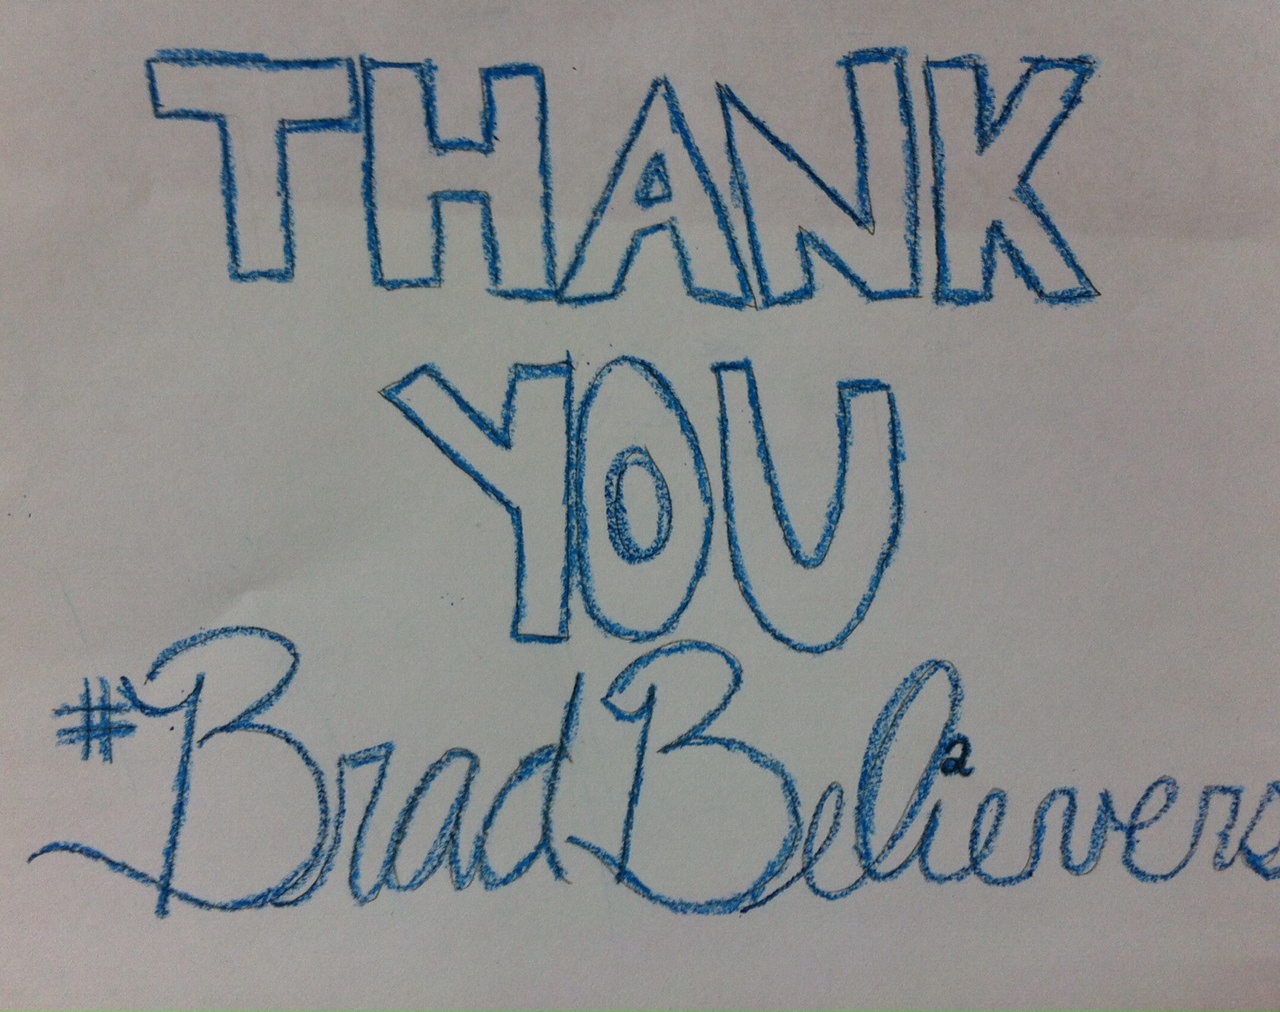 Thank you, Brad Believers!